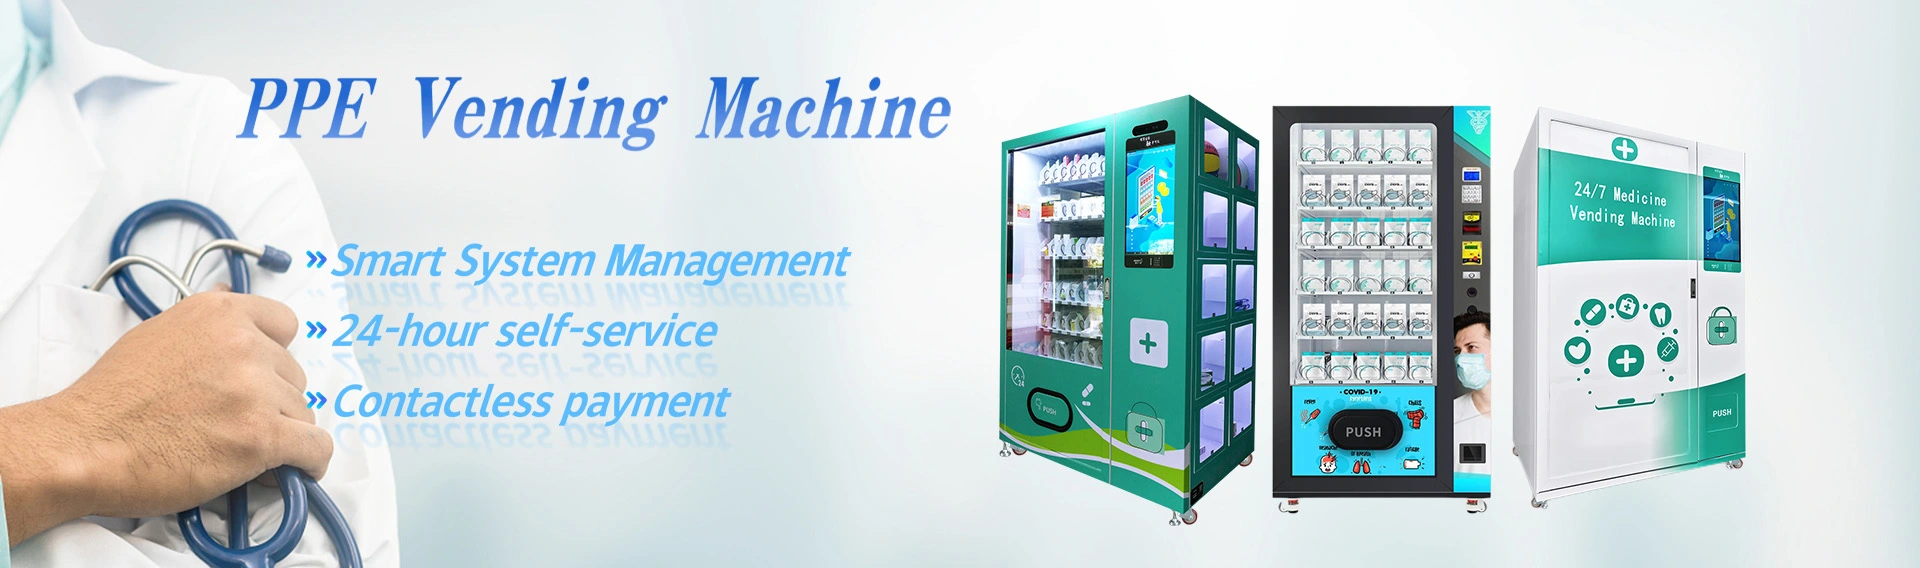 PPE vending machine